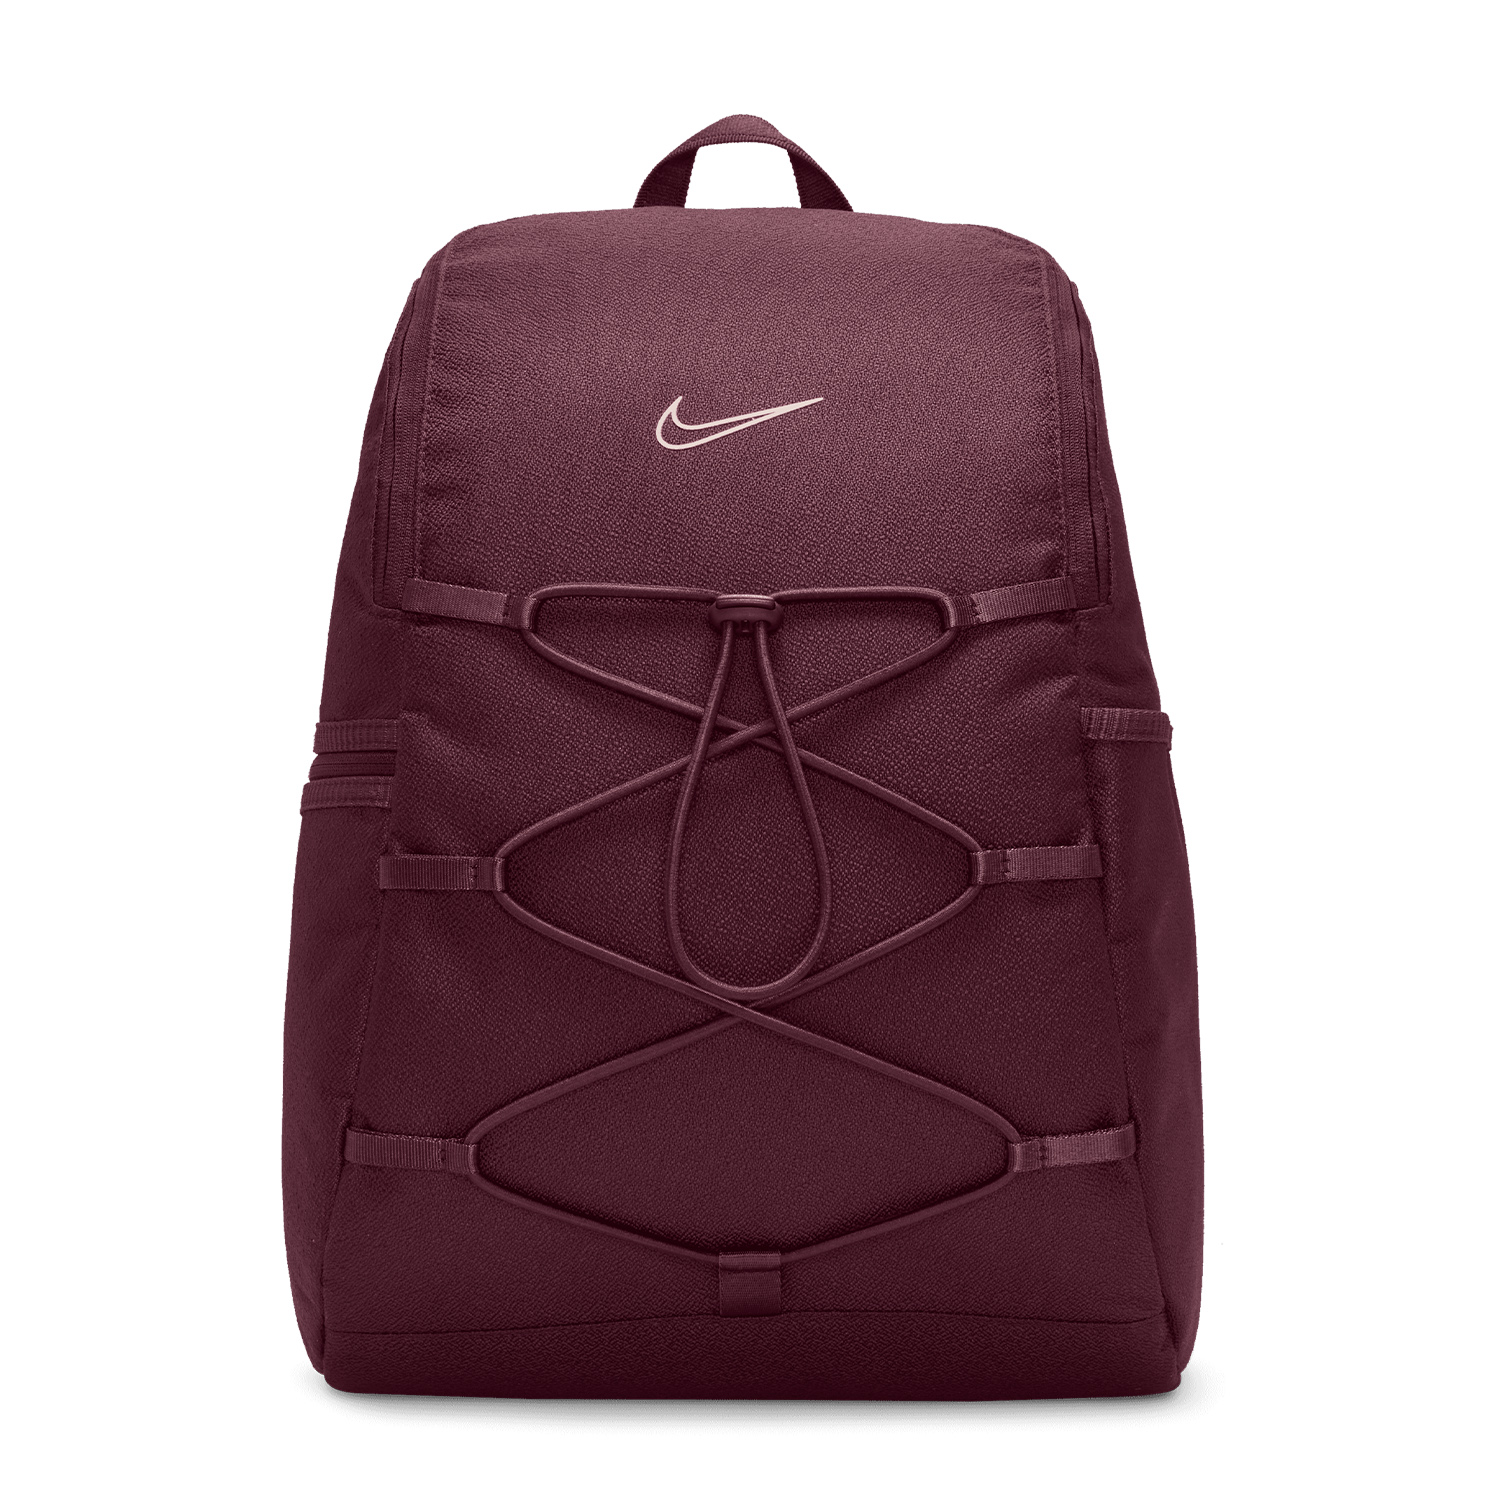 Nike One Backpack - Night Maroon/Guava Ice